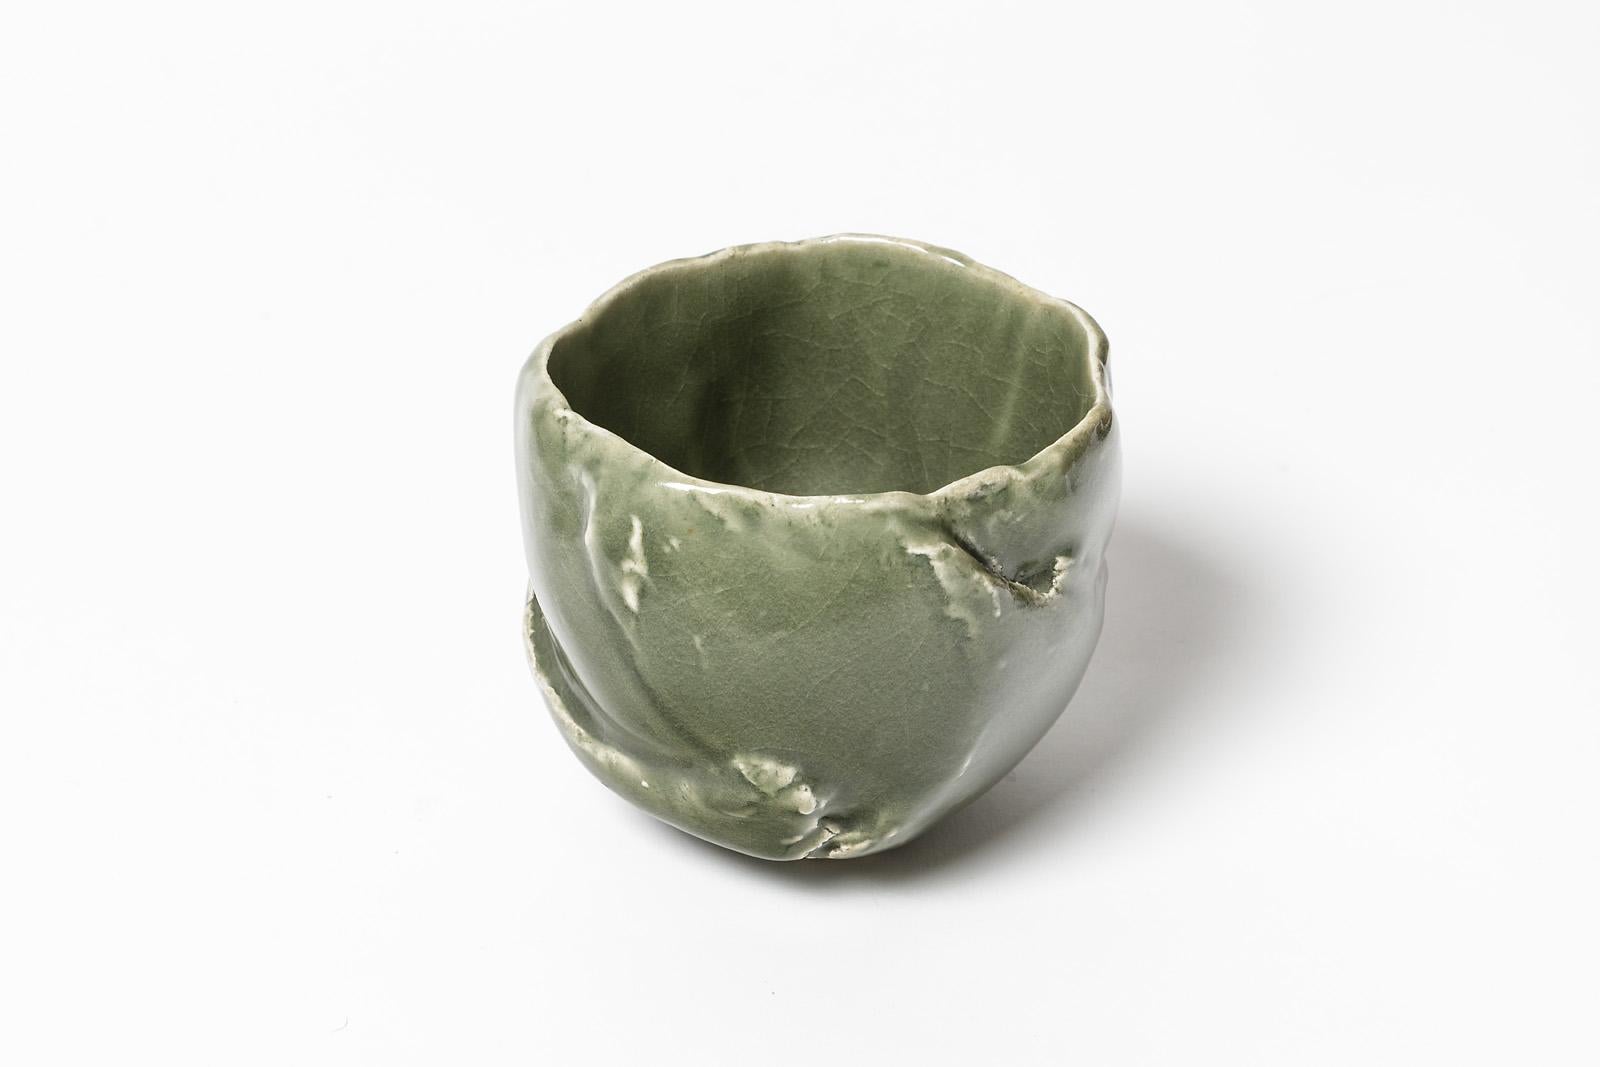 French Ceramic Bowl with Celadon Glaze Decoration, by Jean-François Fouhilloux